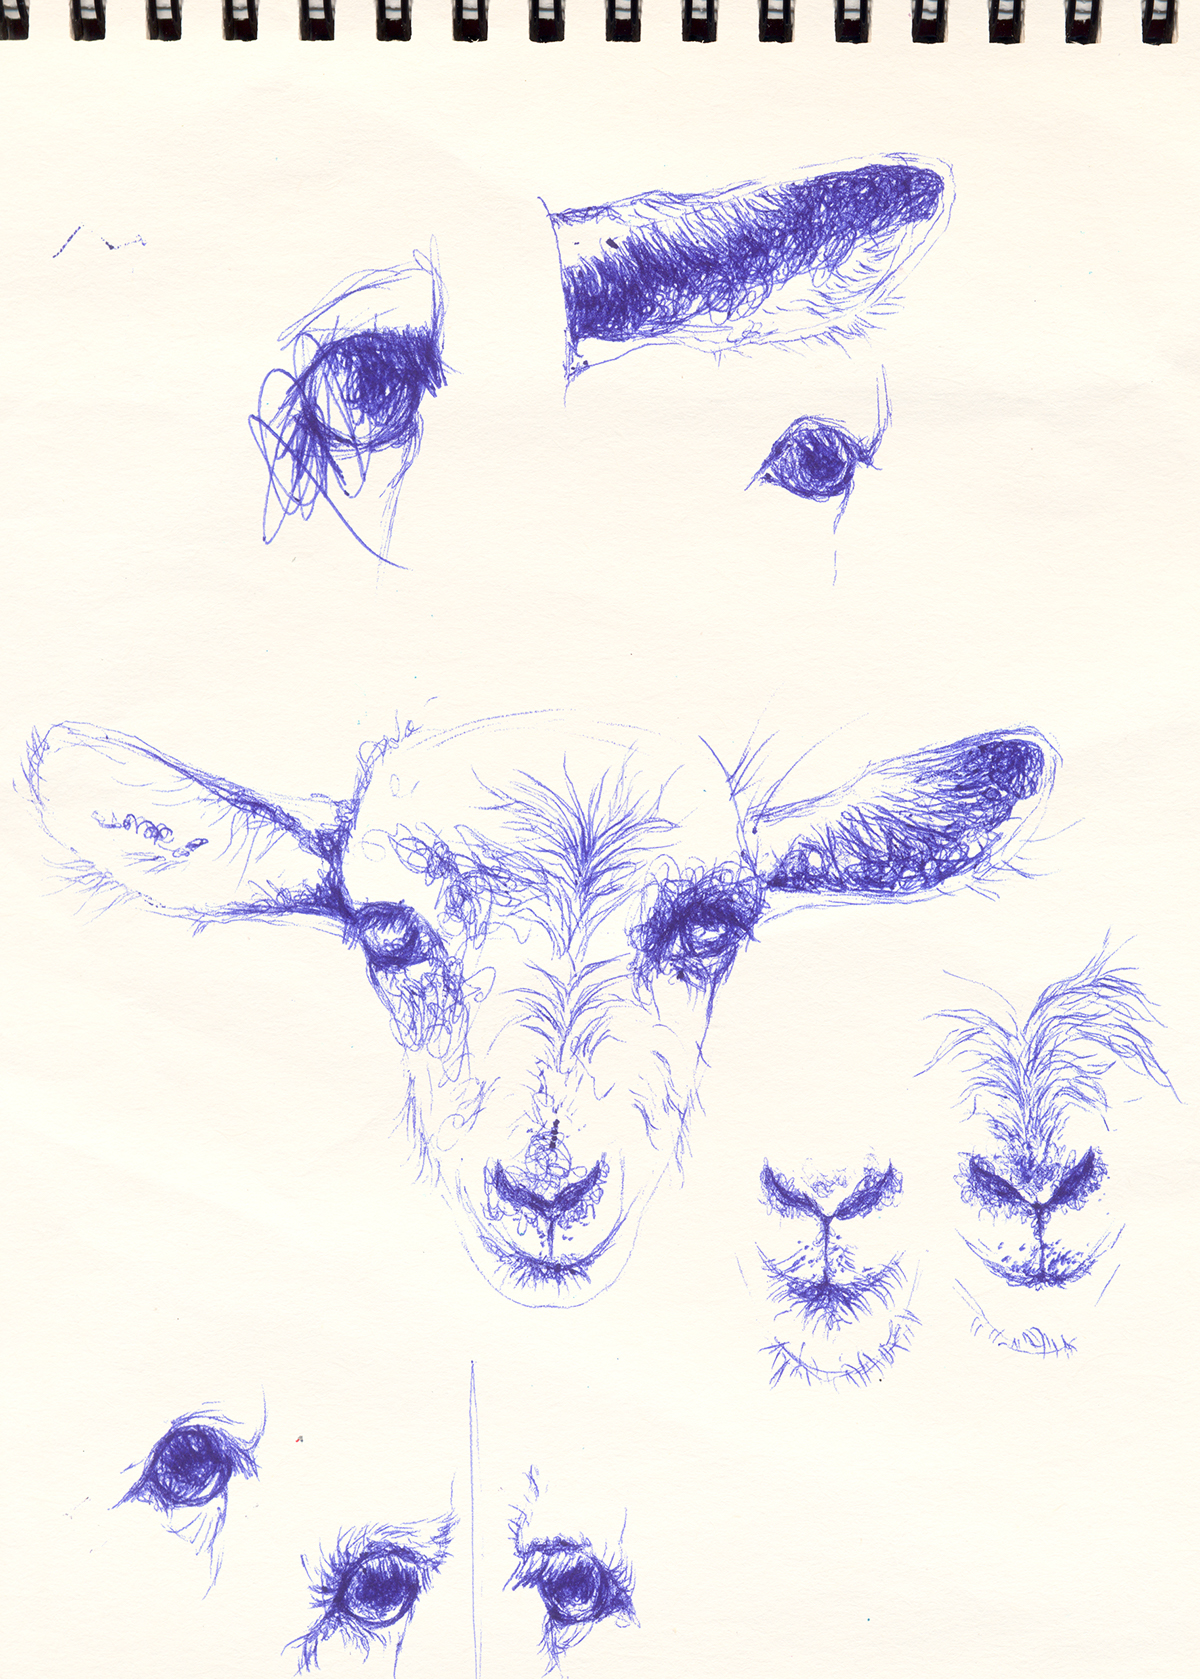 pen ballpoint pen animales fauna camello camel goat cabra blue ballpoint lapicero azul animal giraffe realistic mamíferos mammals